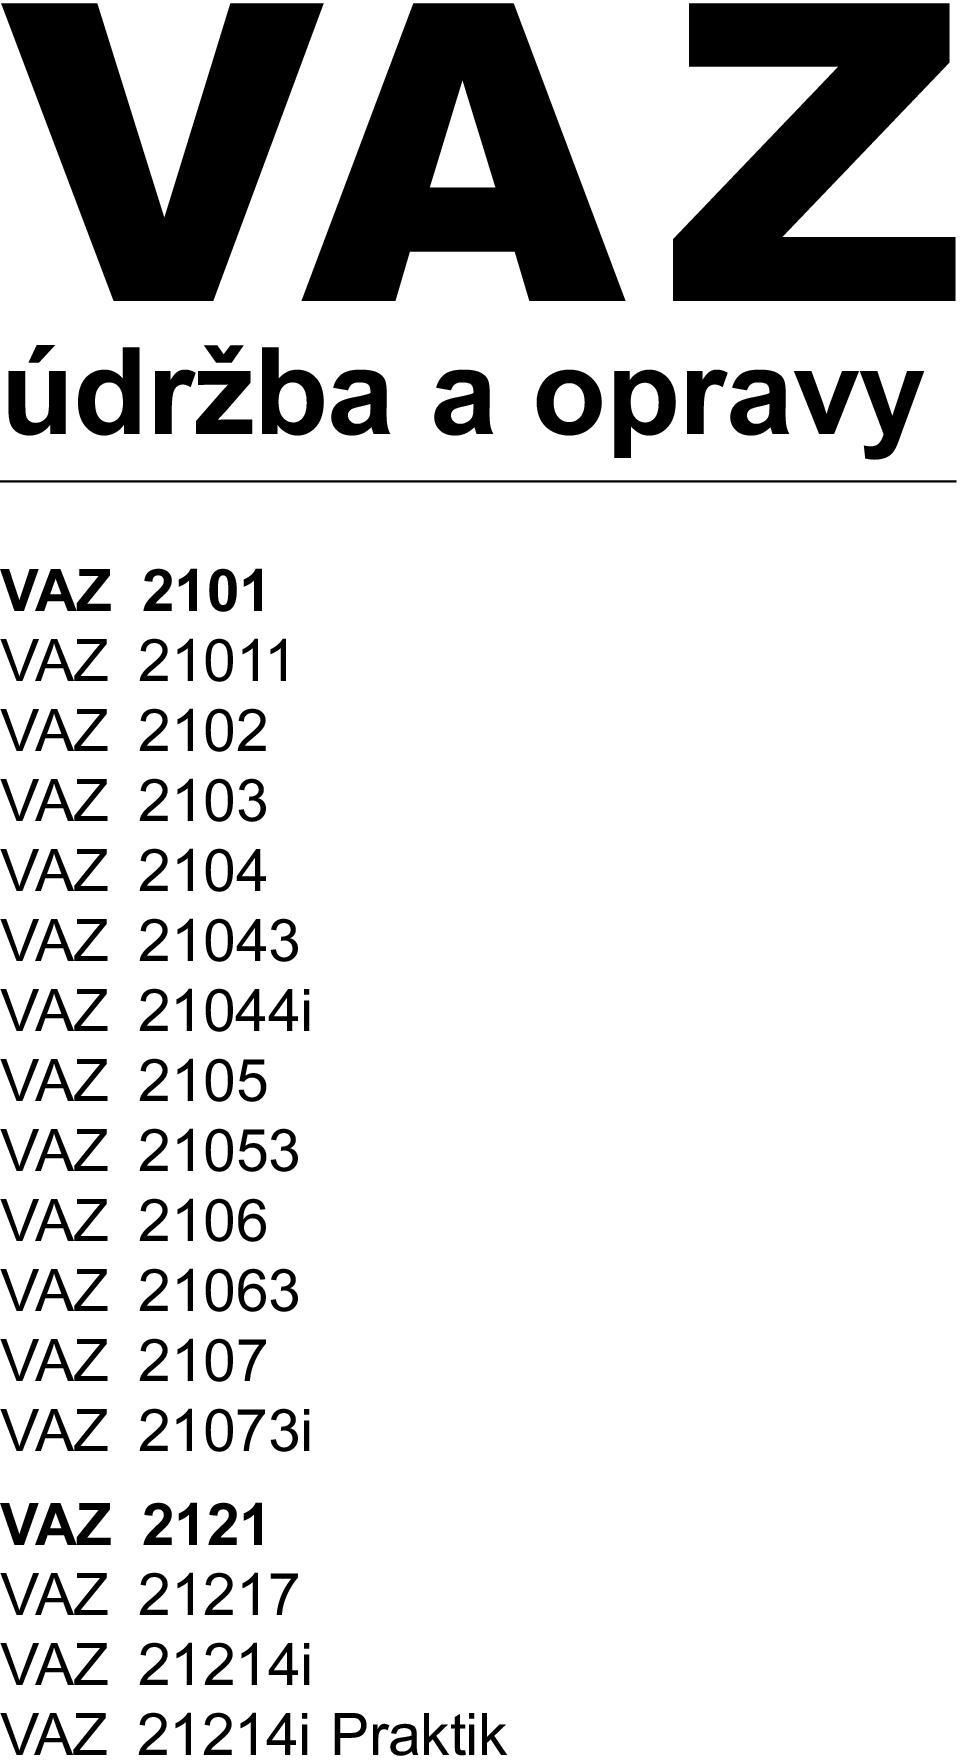 VZ 21053 VZ 2106 VZ 21063 VZ 2107 VZ 21073i